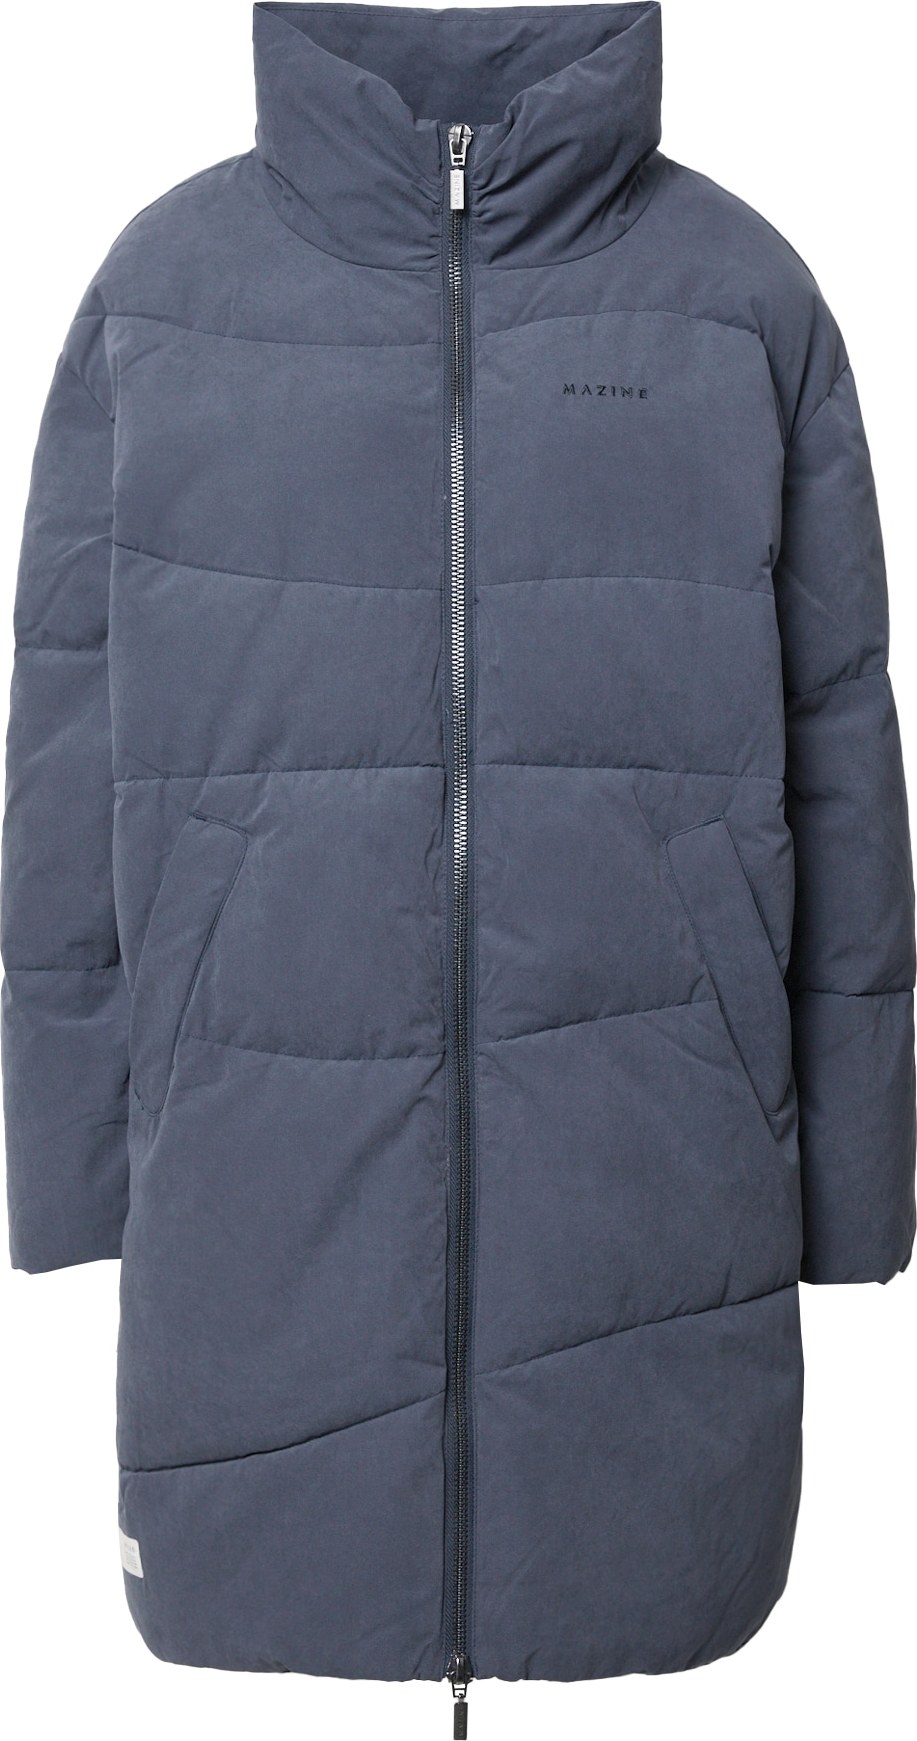 mazine Zimní bunda 'Drew' marine modrá